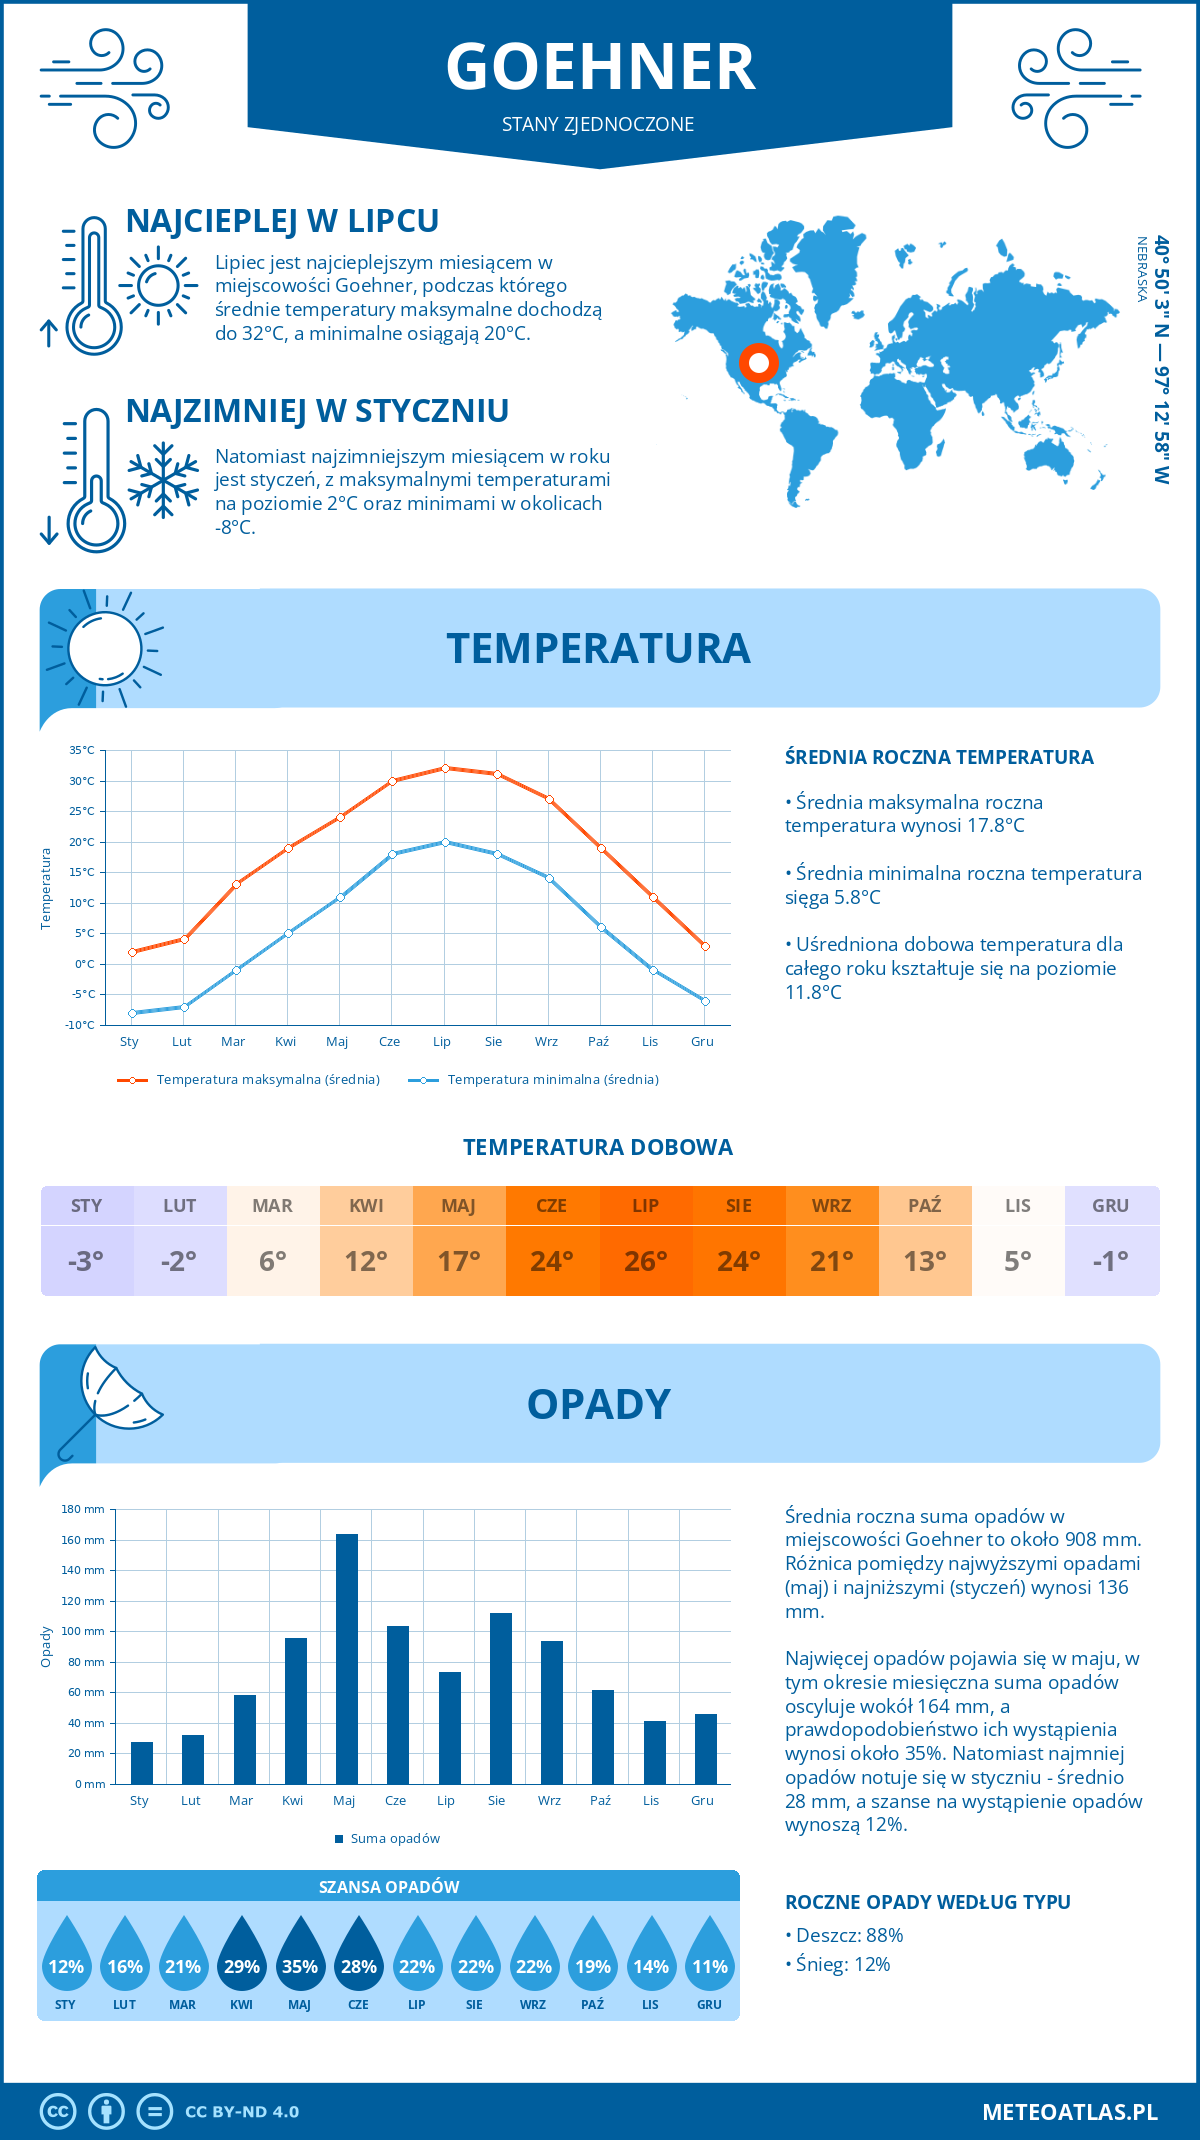 Pogoda Goehner (Stany Zjednoczone). Temperatura oraz opady.